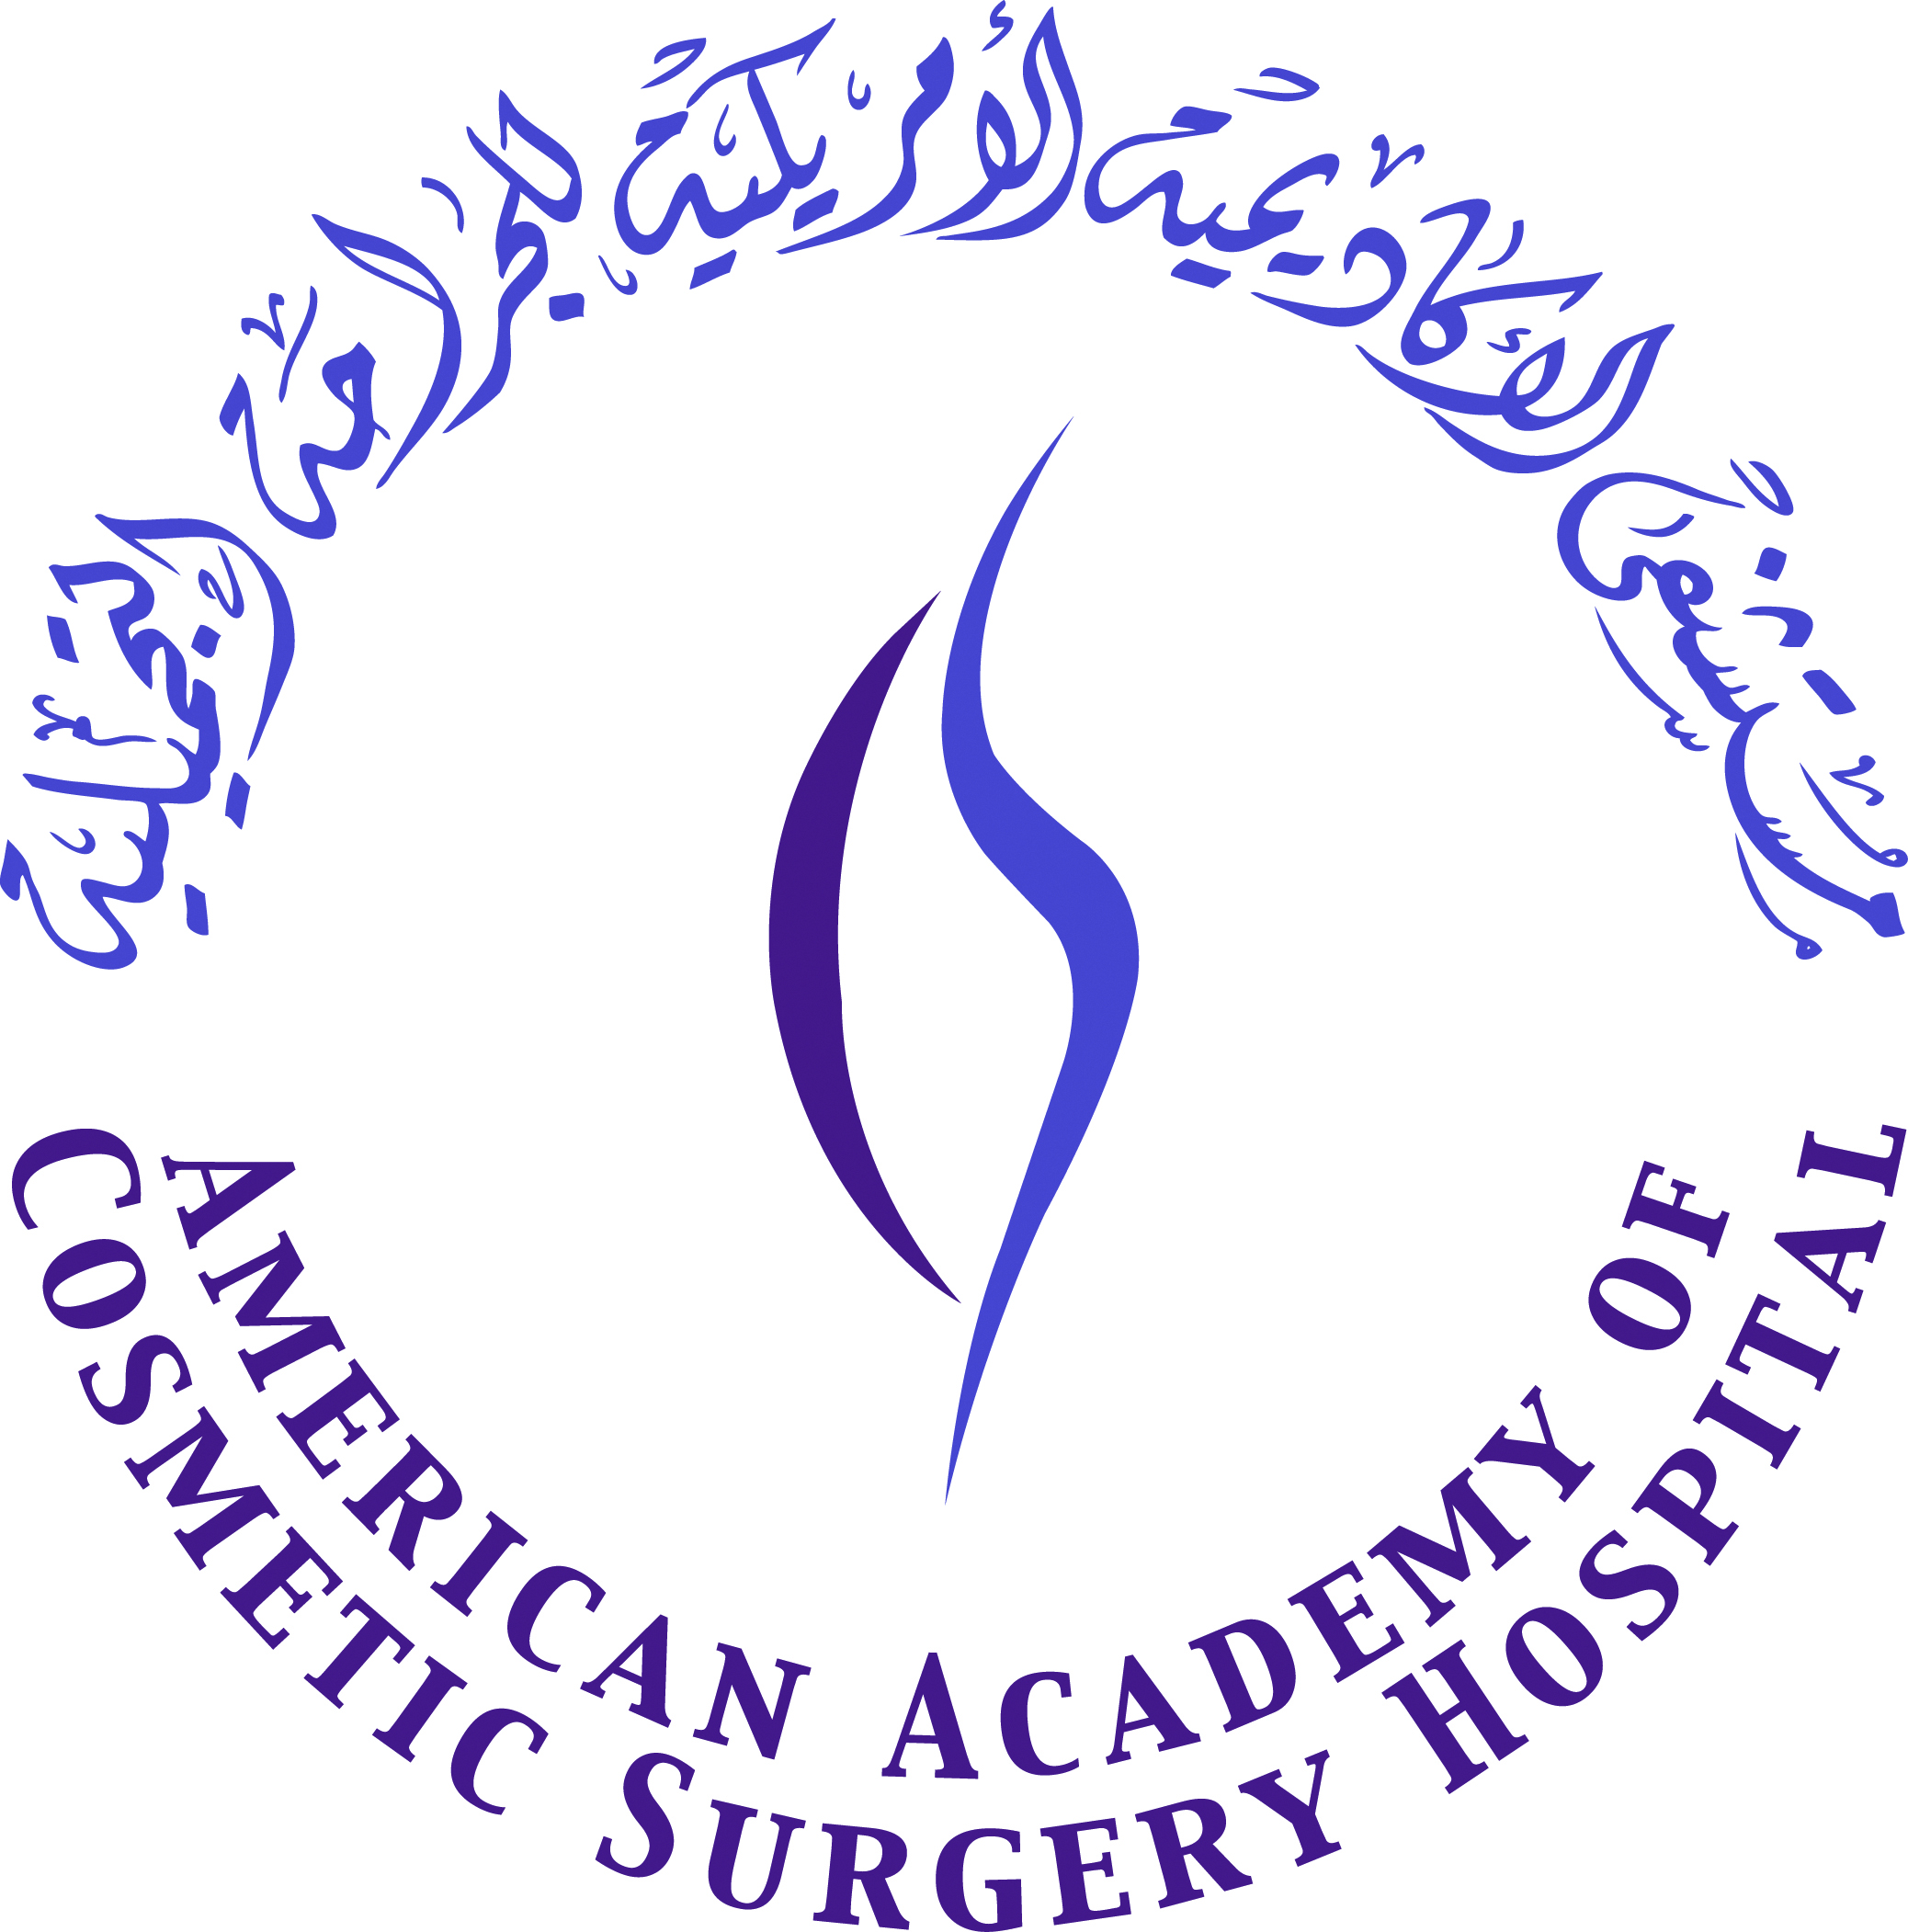 American Academy of Cosmetic Surgery Hospital Logo